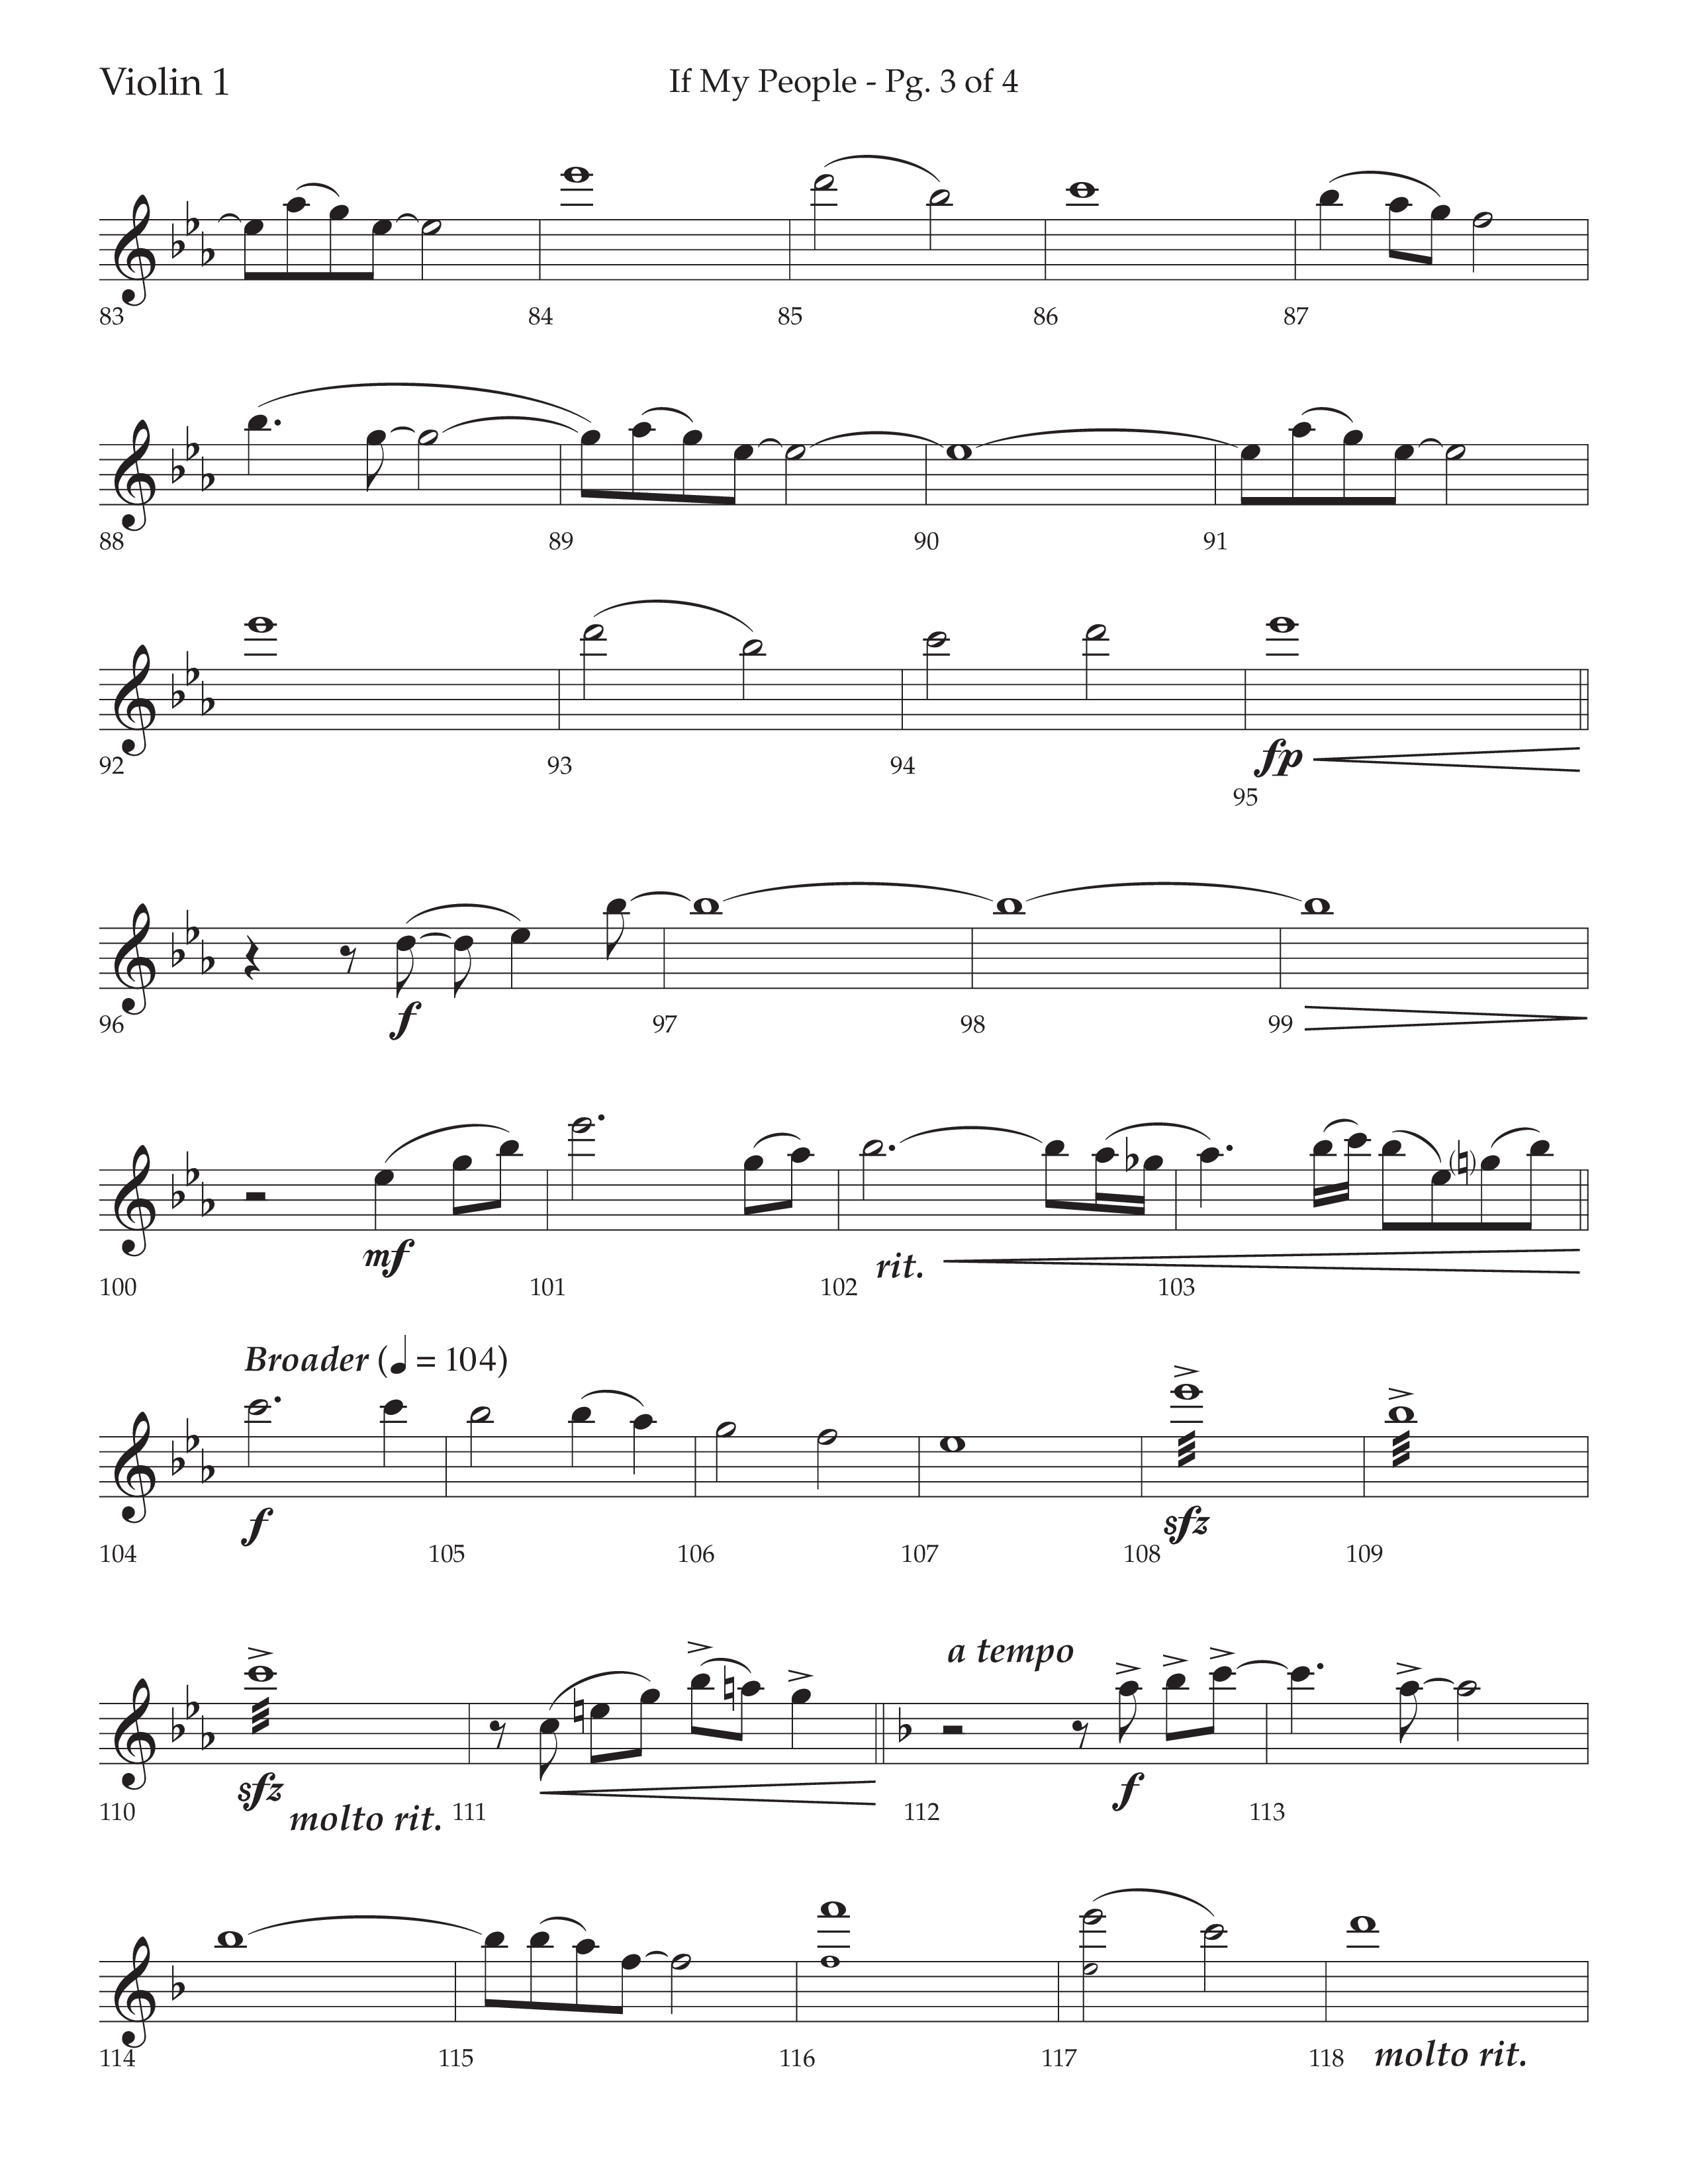 If My People (Choral Anthem SATB) Violin 1 (Lifeway Choral / Arr. David Wise / Orch. David Shipps)